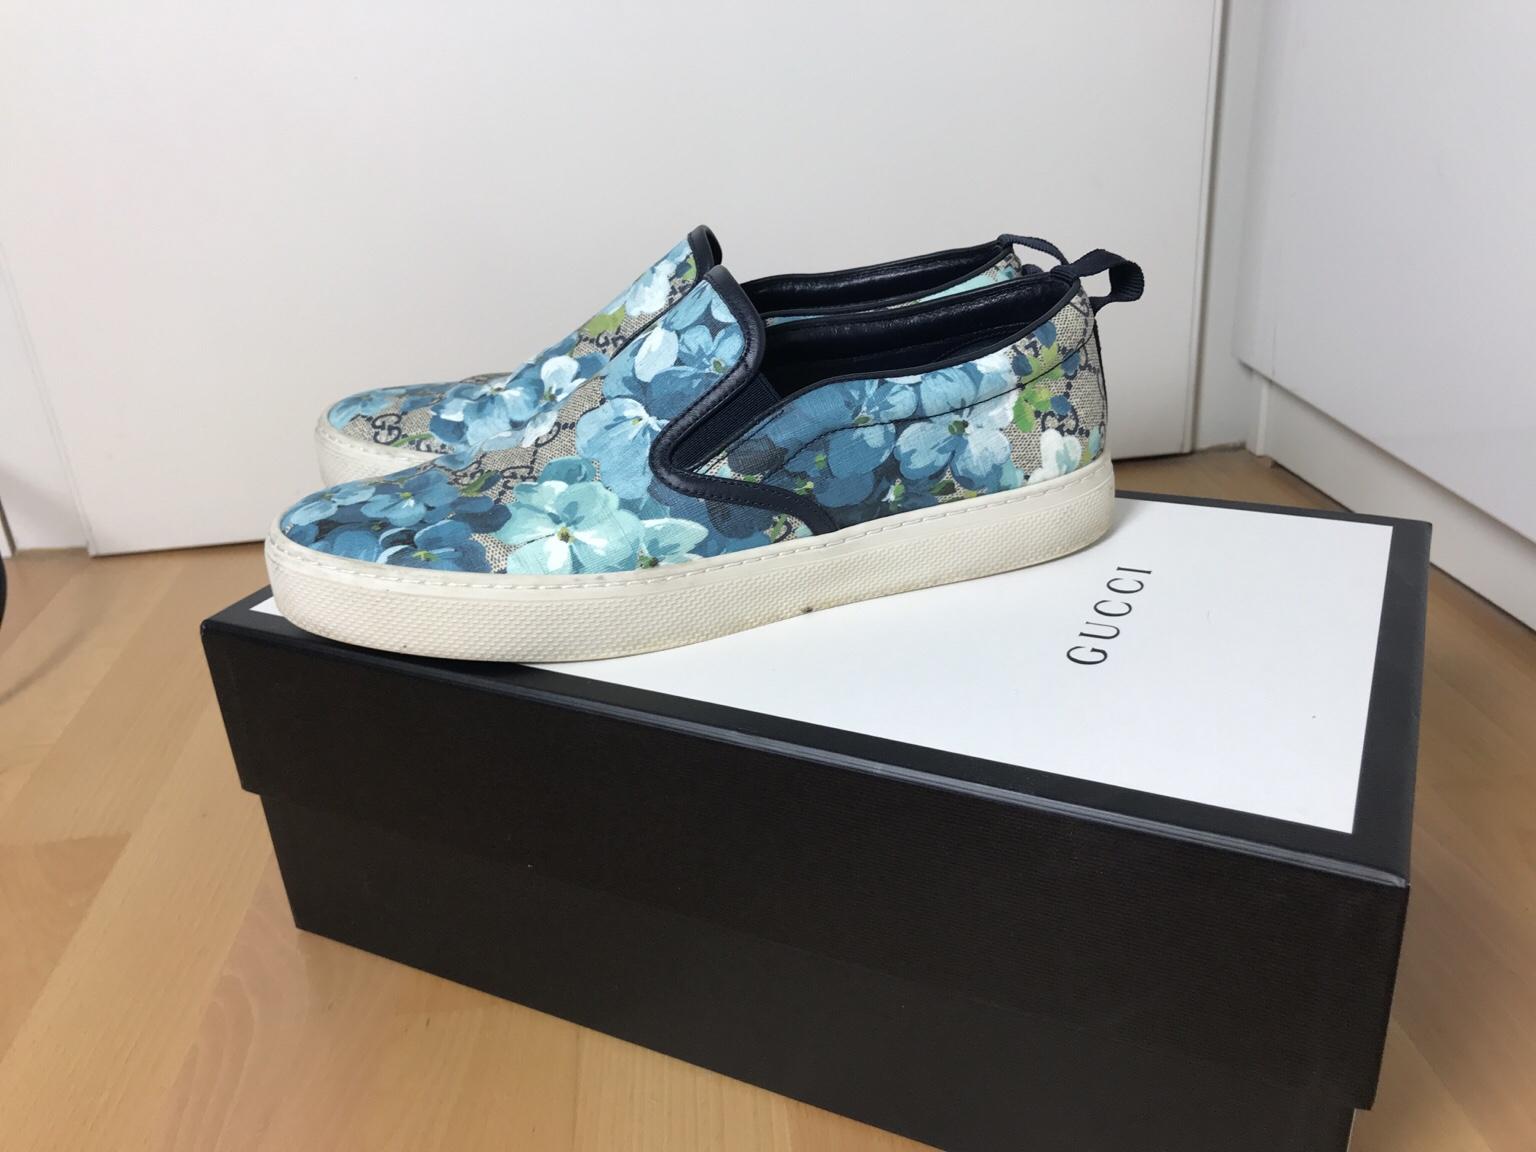 gucci bloom slip on sneakers